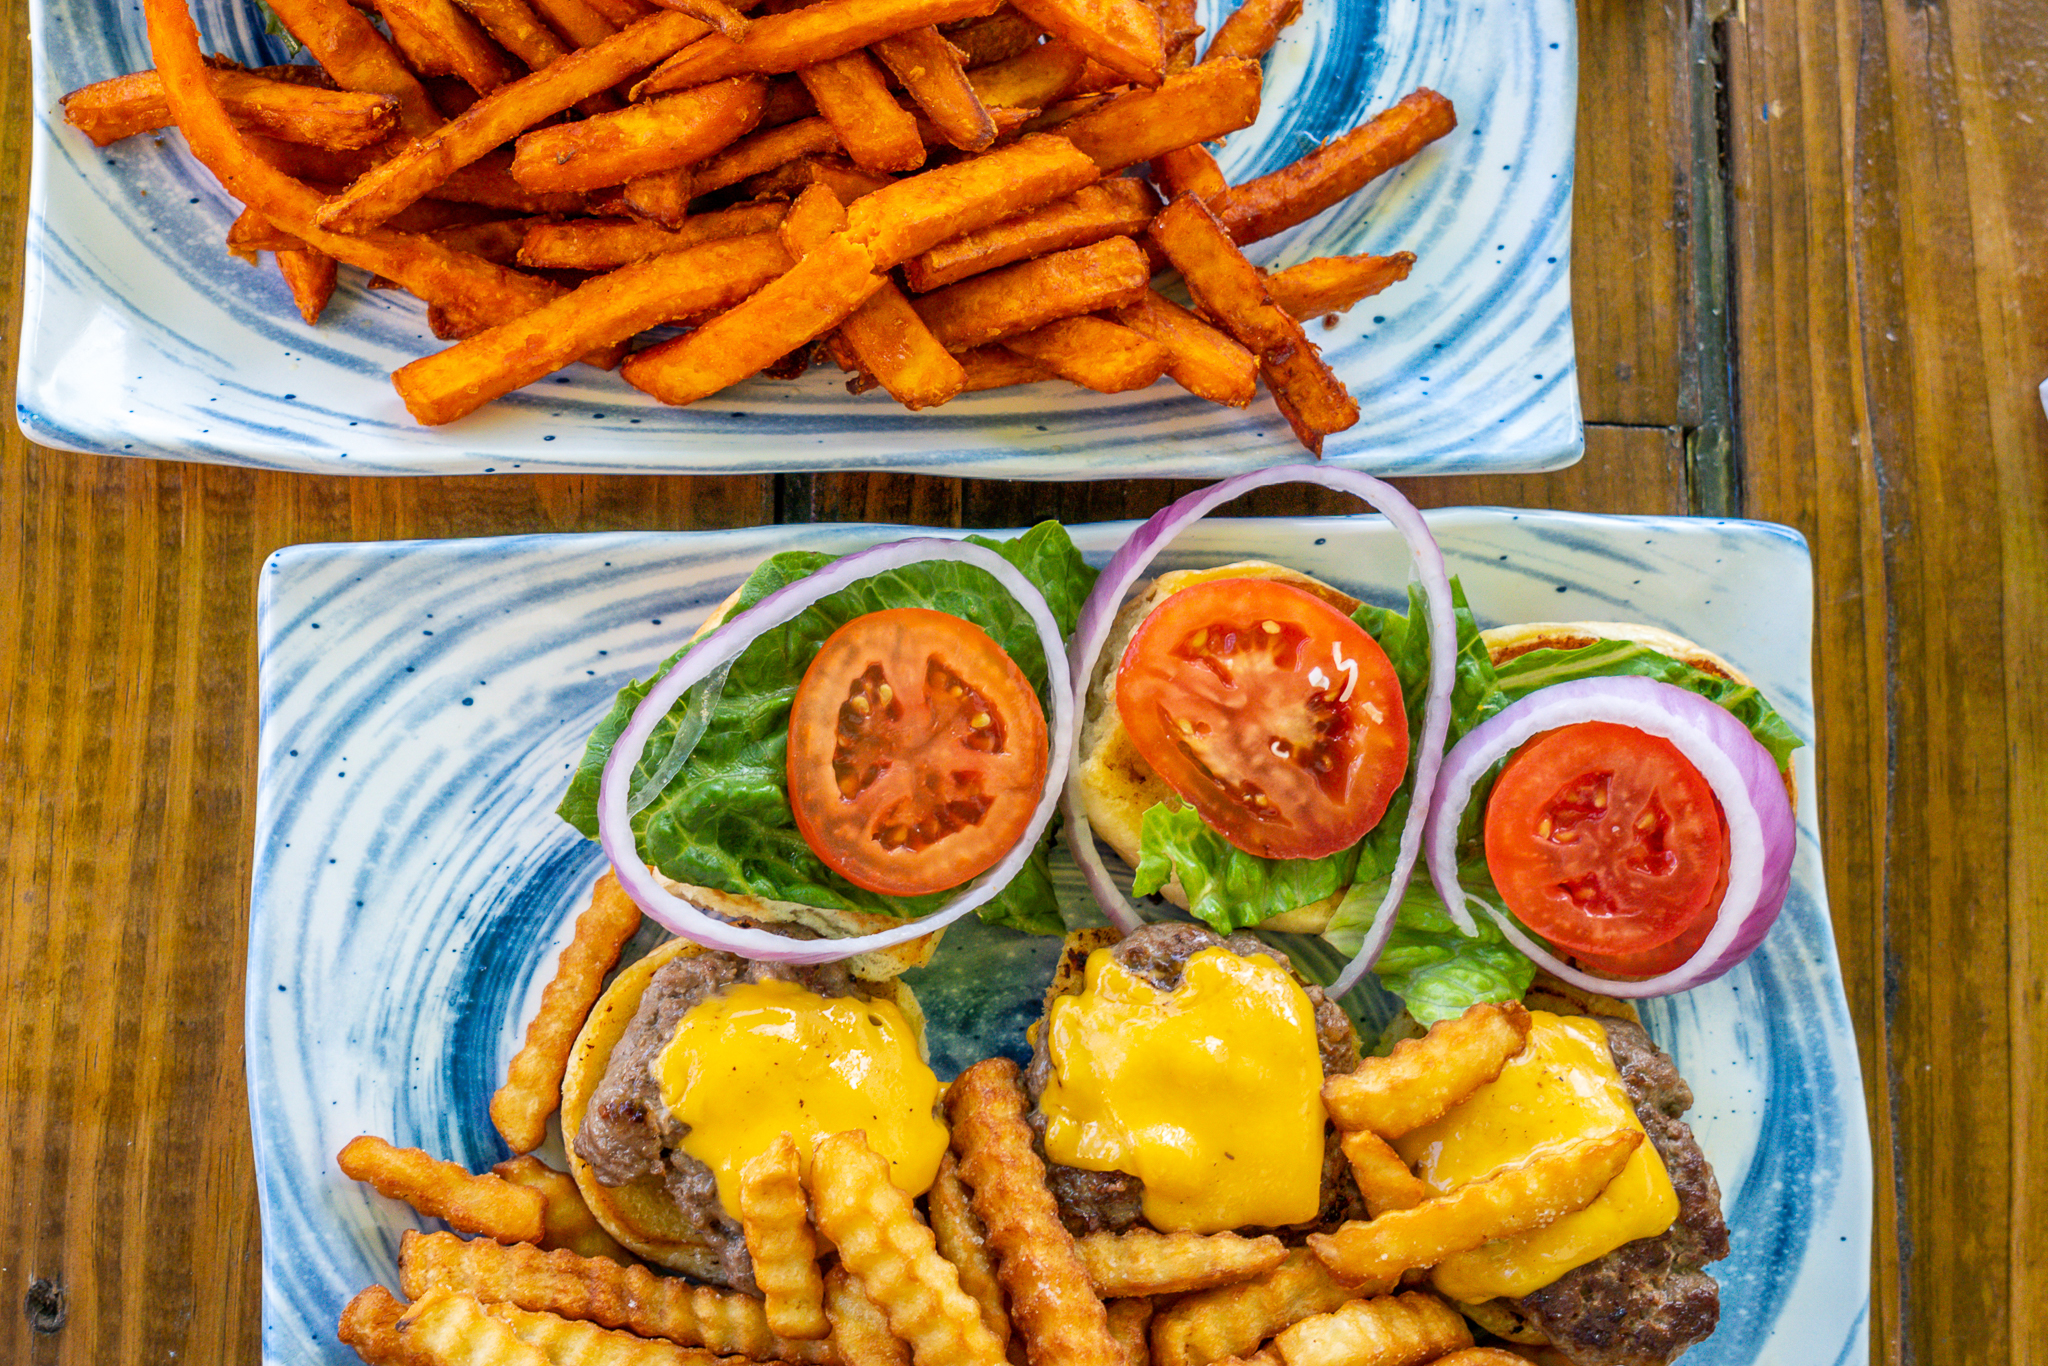 https://stpetersburgfoodies.com/wp-content/uploads/2021/05/Burger-Ish_Geez-Louise-Sliders-and-Sweet-Potato-Fries.jpg